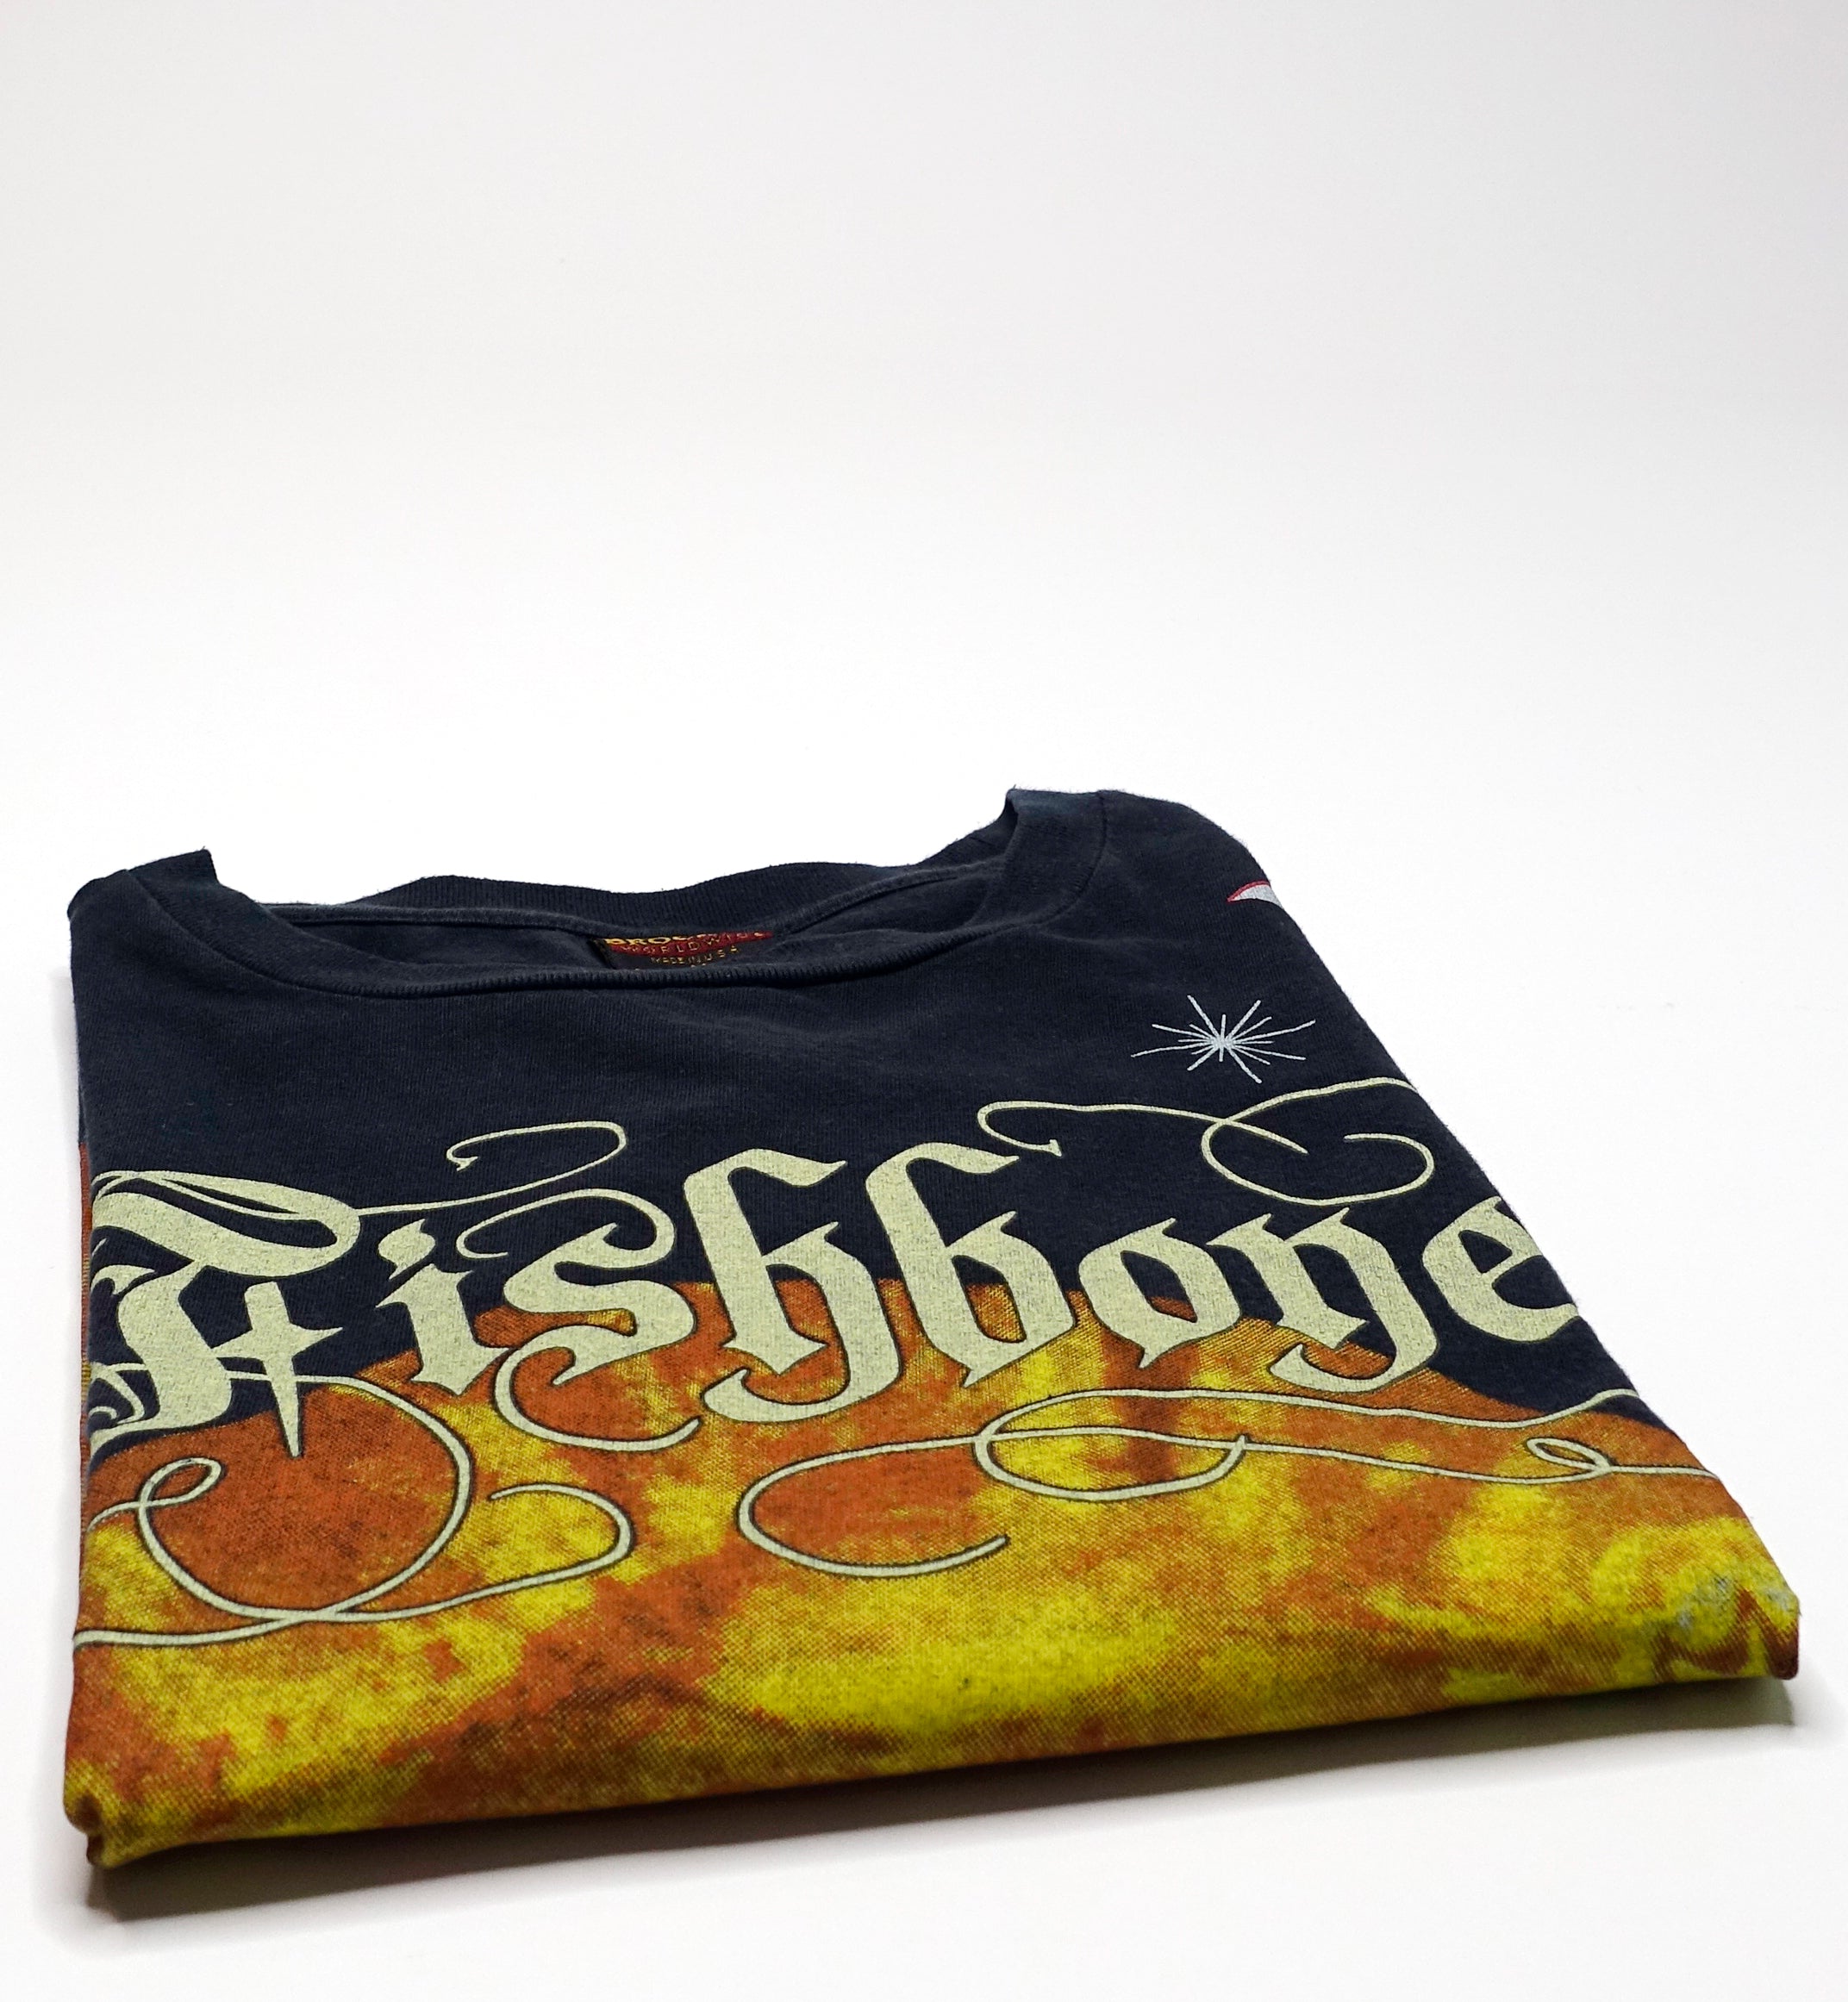 Fishbone - Give A Monkey A Brain All Over Print 1993 Tour Shirt Size XL